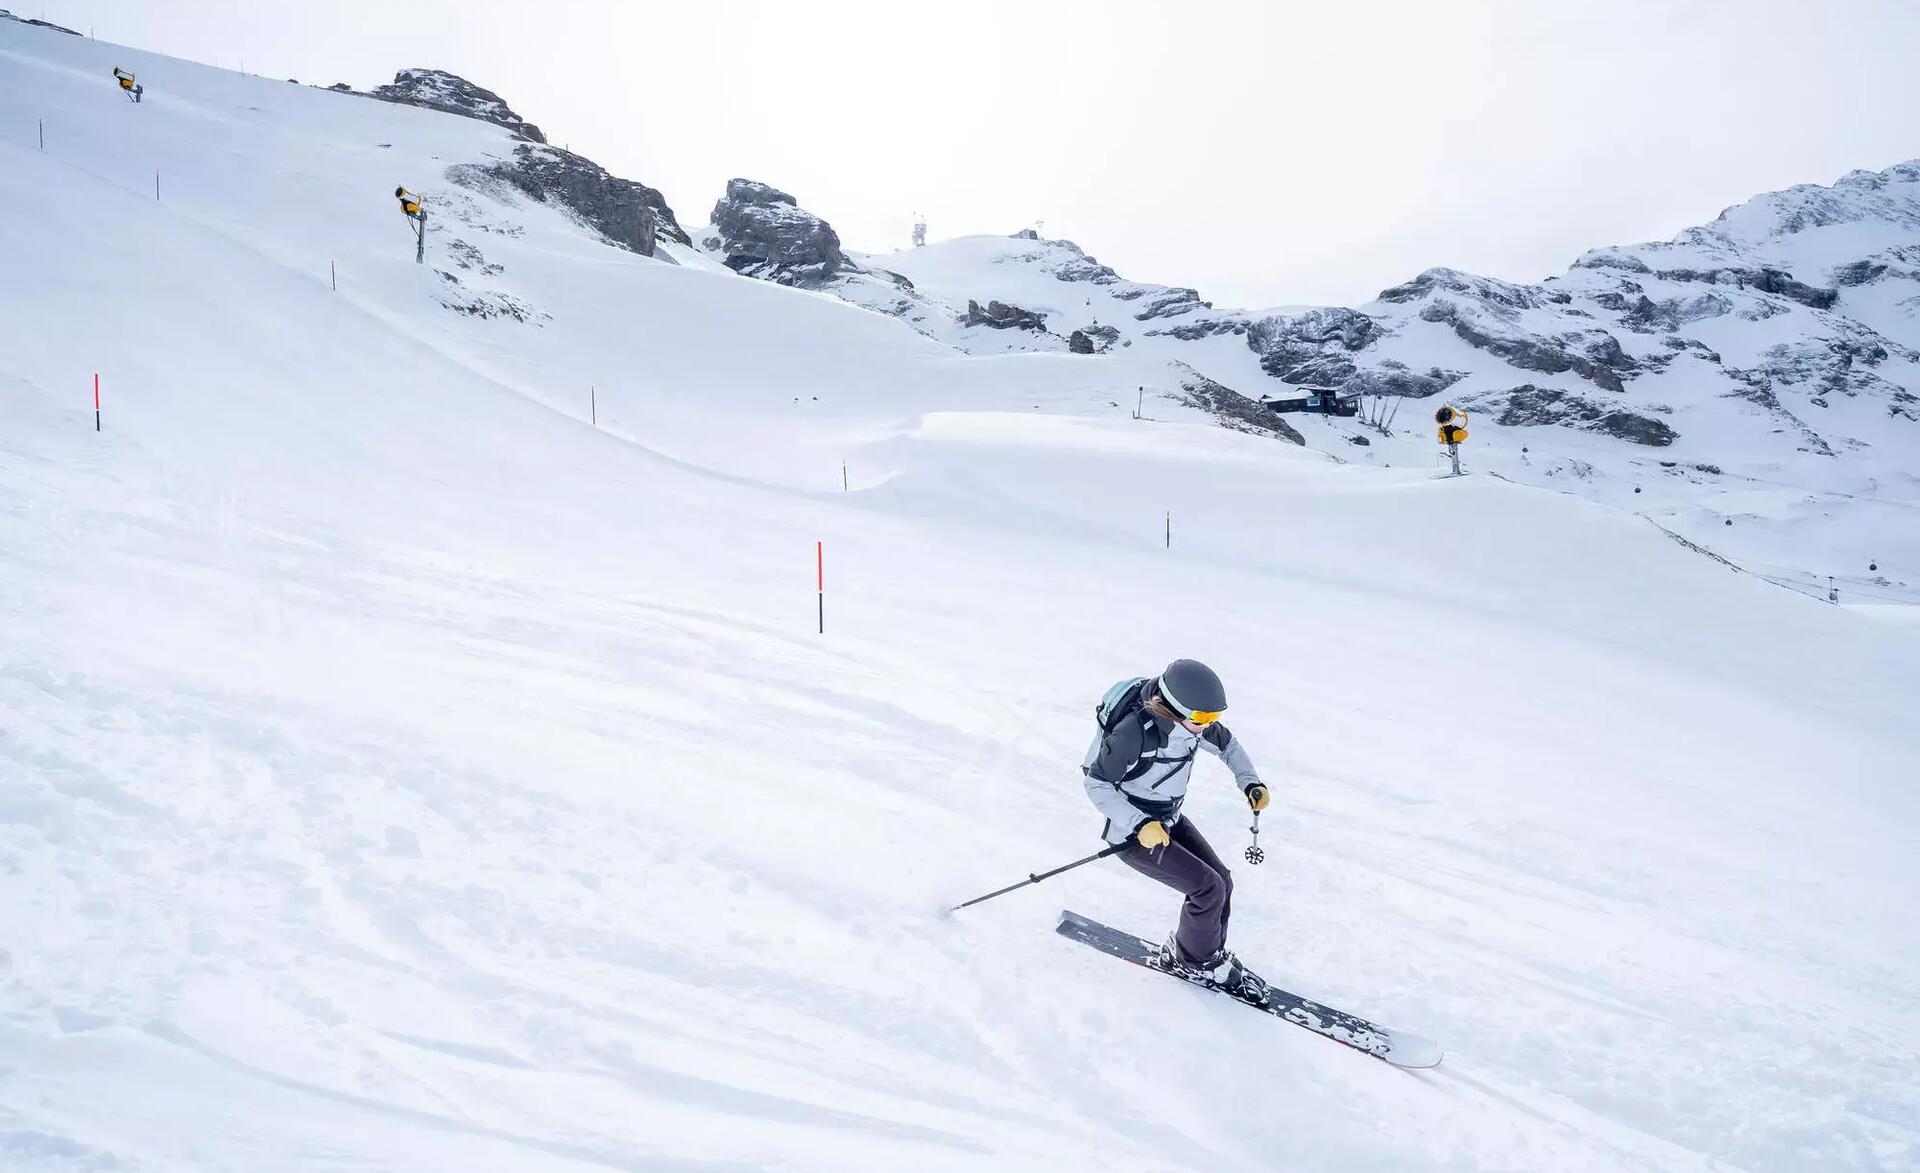 A free ride skier going down a fresh powdered ski slope